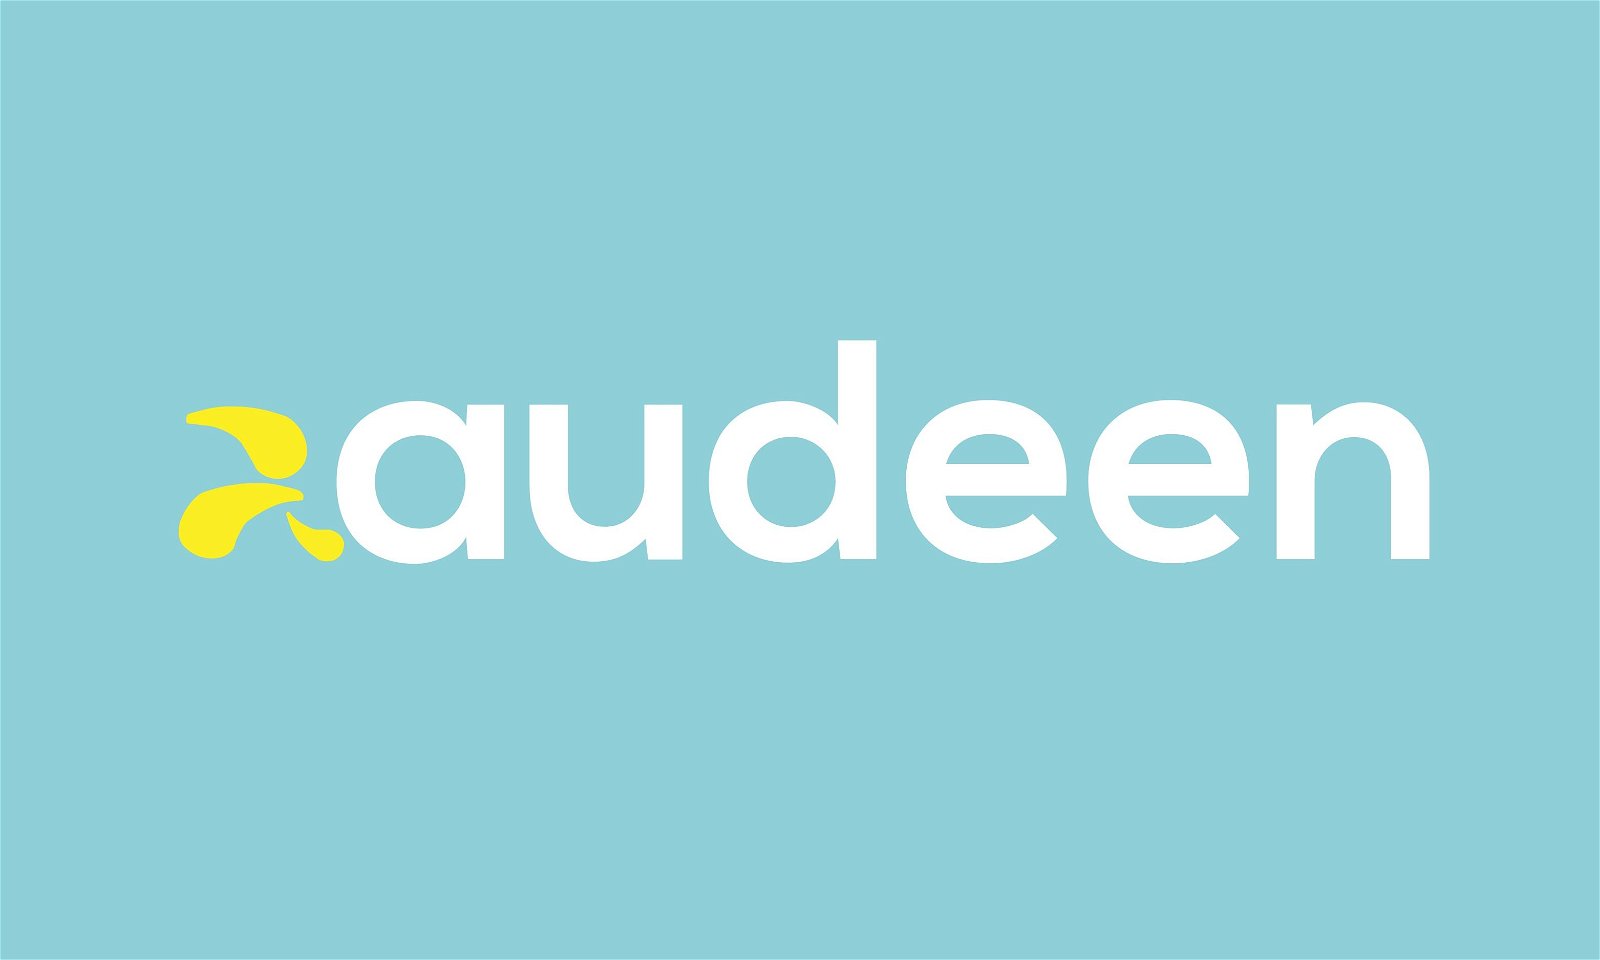 Audeen.com - Creative brandable domain for sale